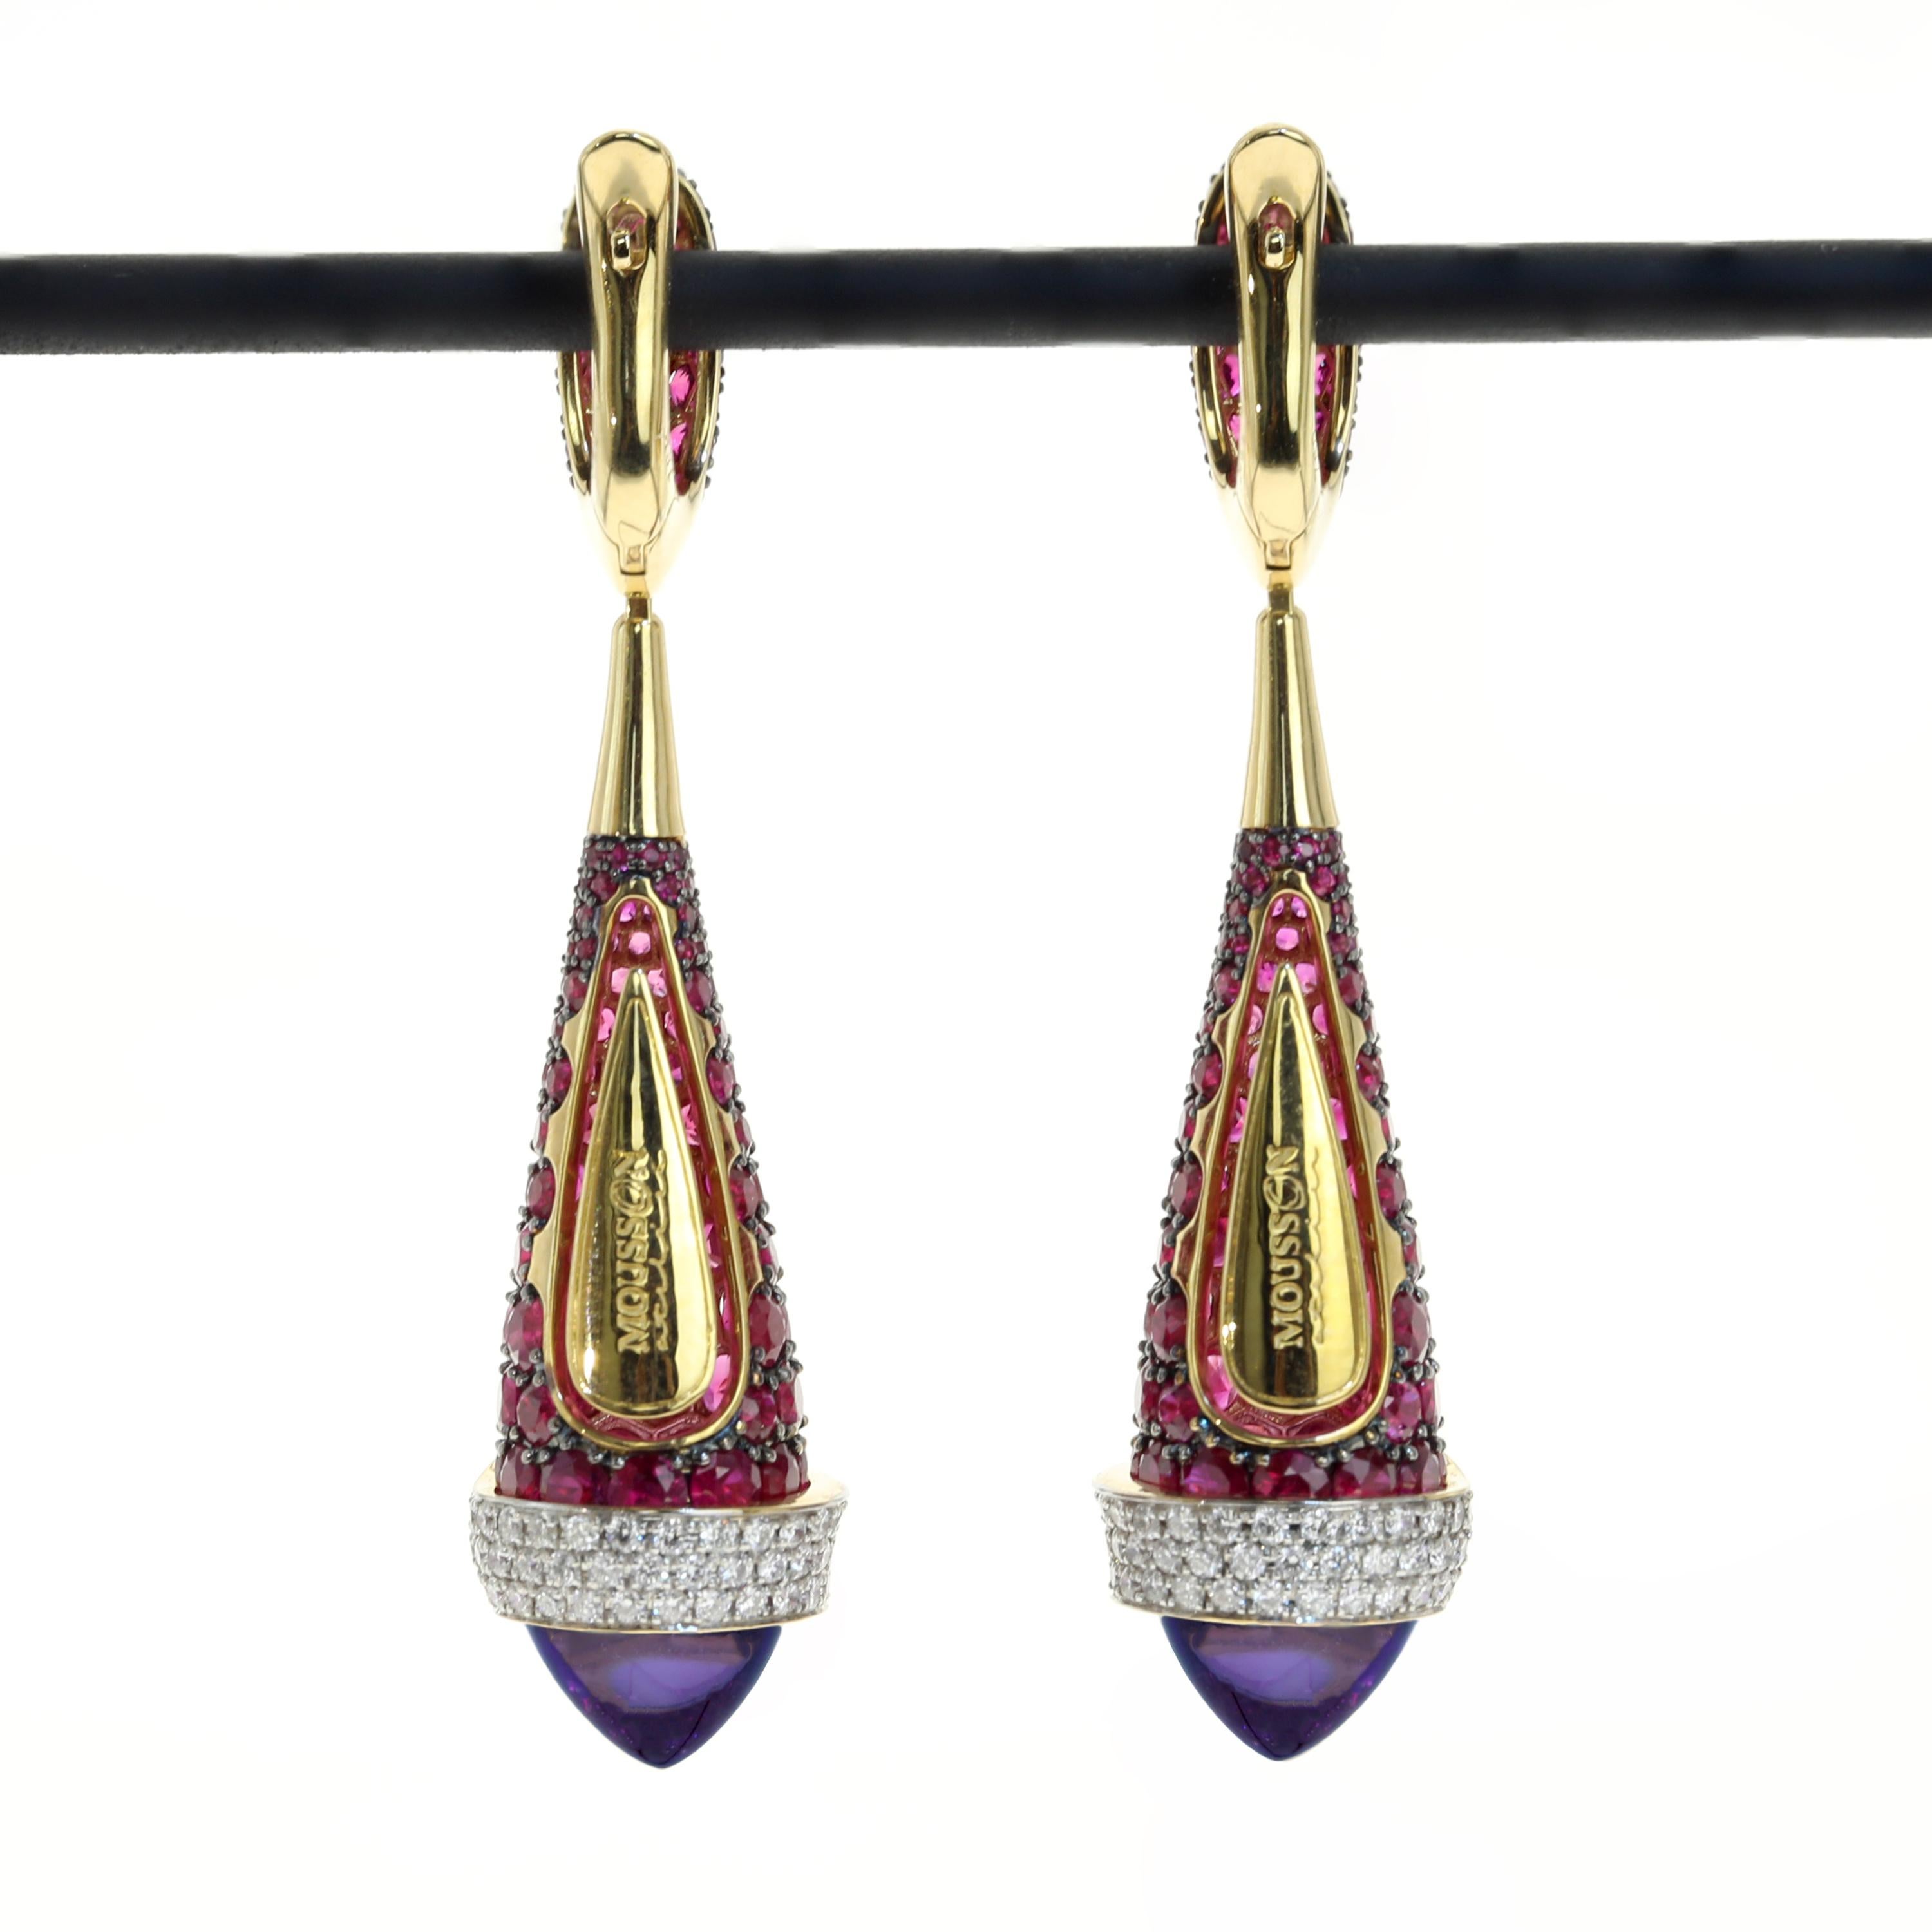 Amethyst 8.87 Carat Ruby Diamond 18 Karat Yellow Gold Earrings

Have Ring LU116414707711

12.3x51 mm
13.65 gm